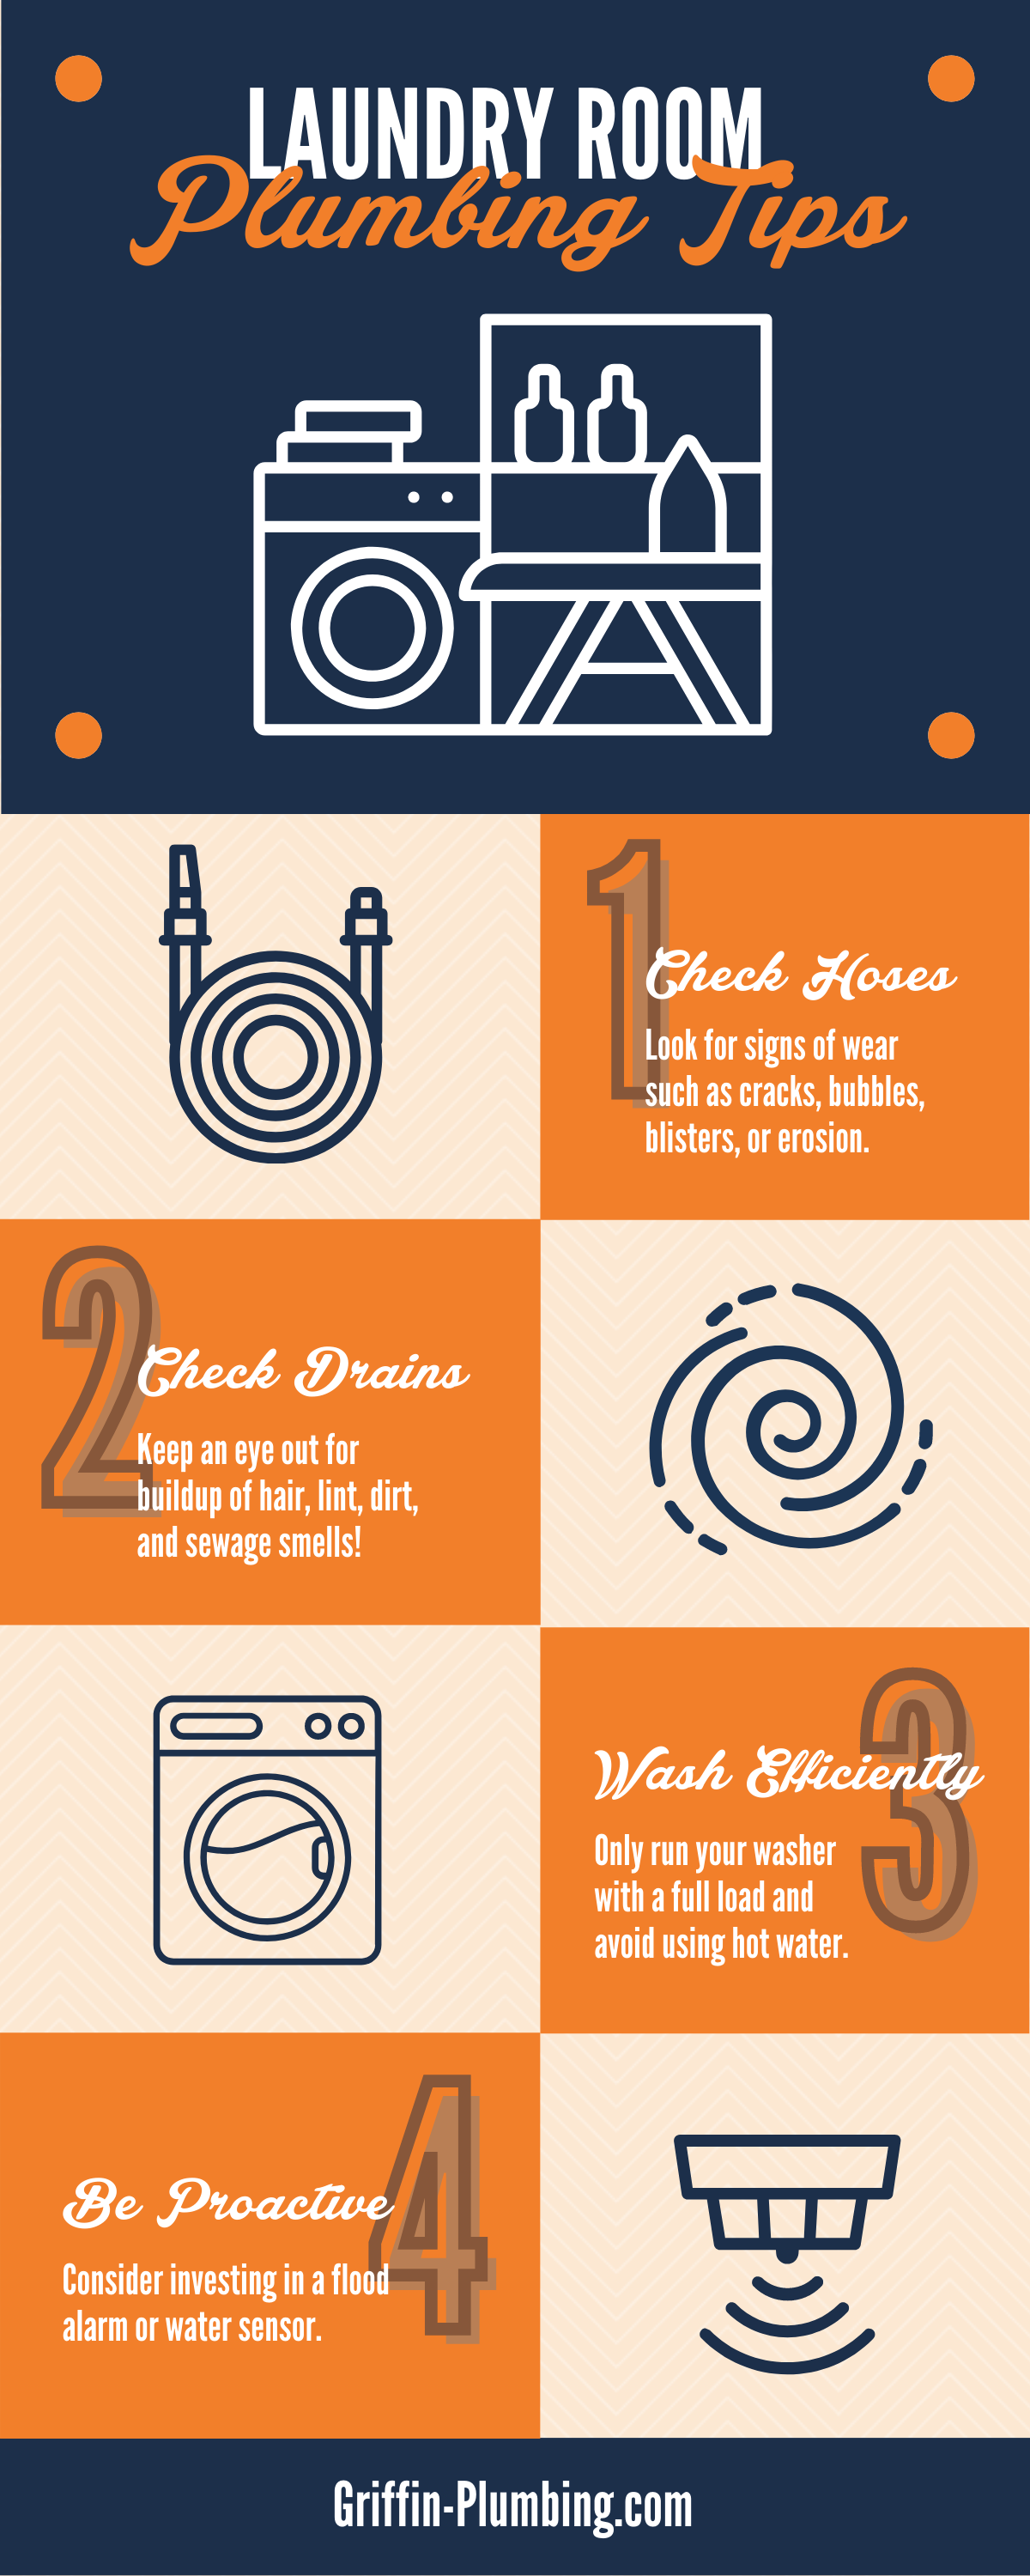 Laundry Room Plumbing Tips Infographic